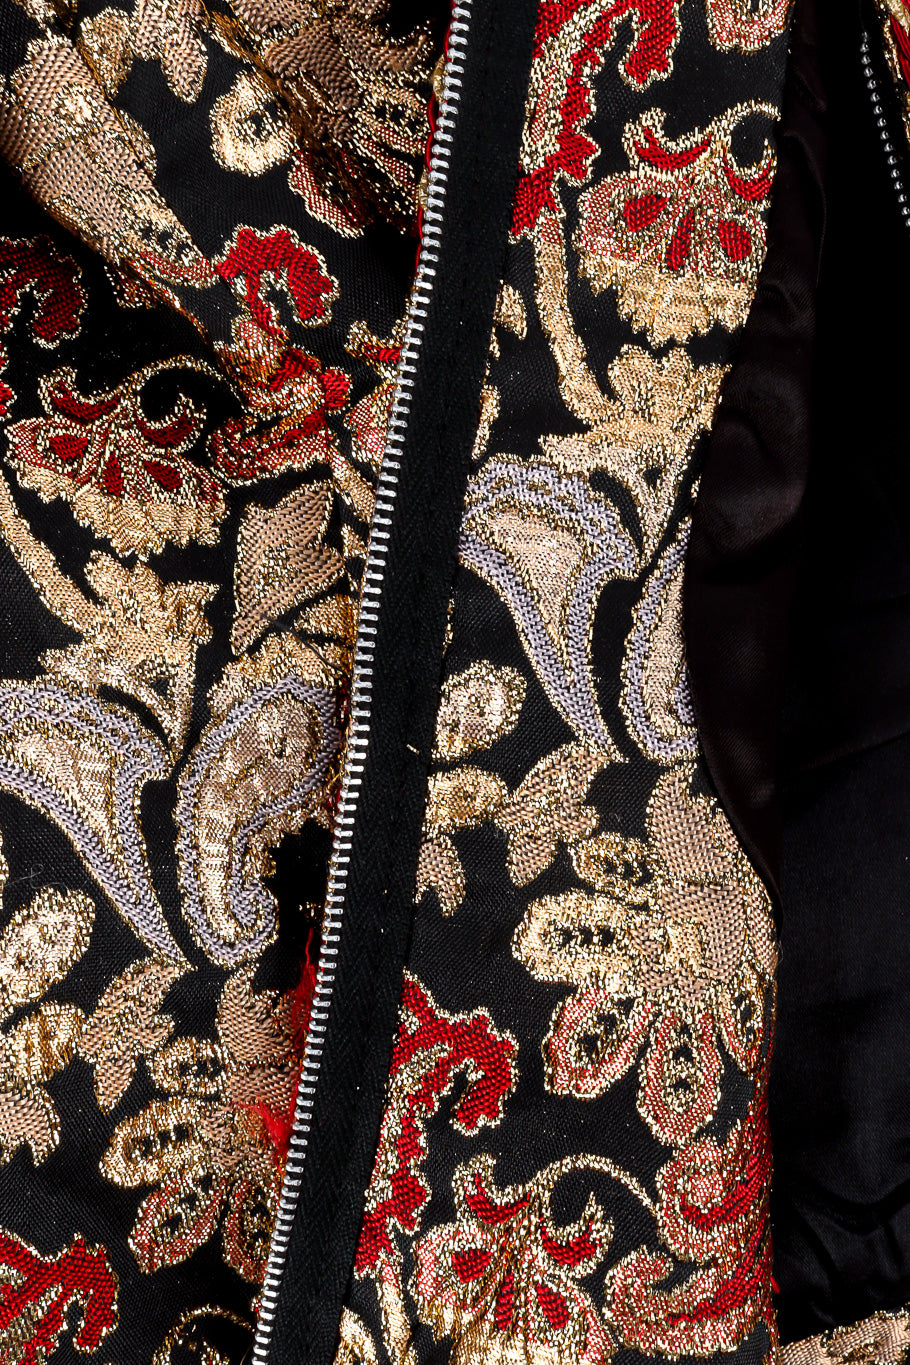 brocade pattern jacket by Victor Costa zipper @recessla